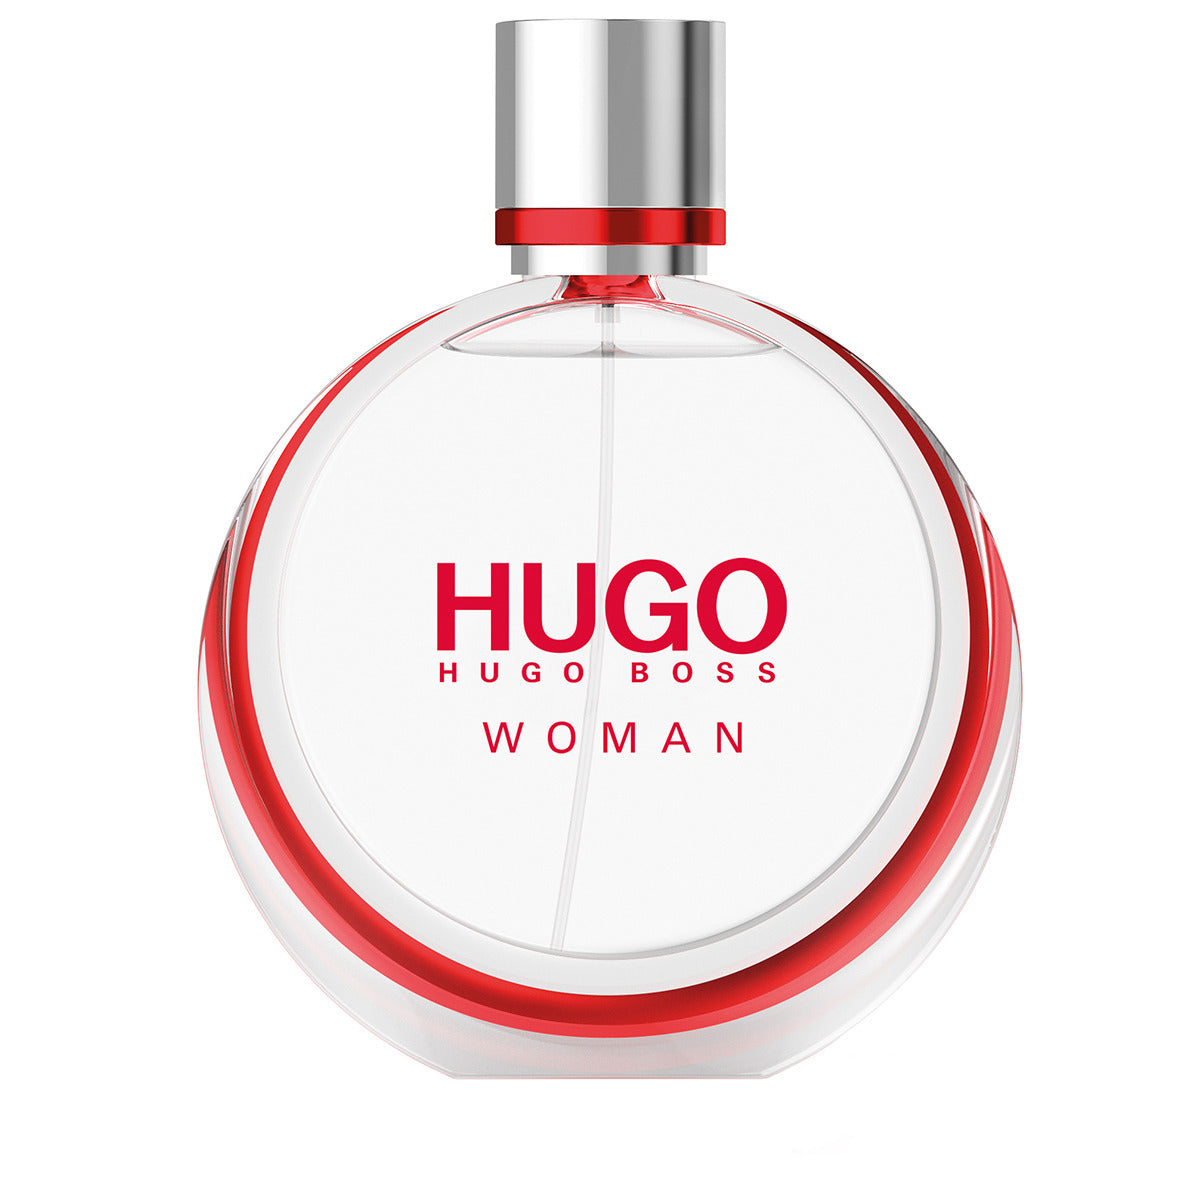 hugo boss hugo woman woda perfumowana 50 ml   